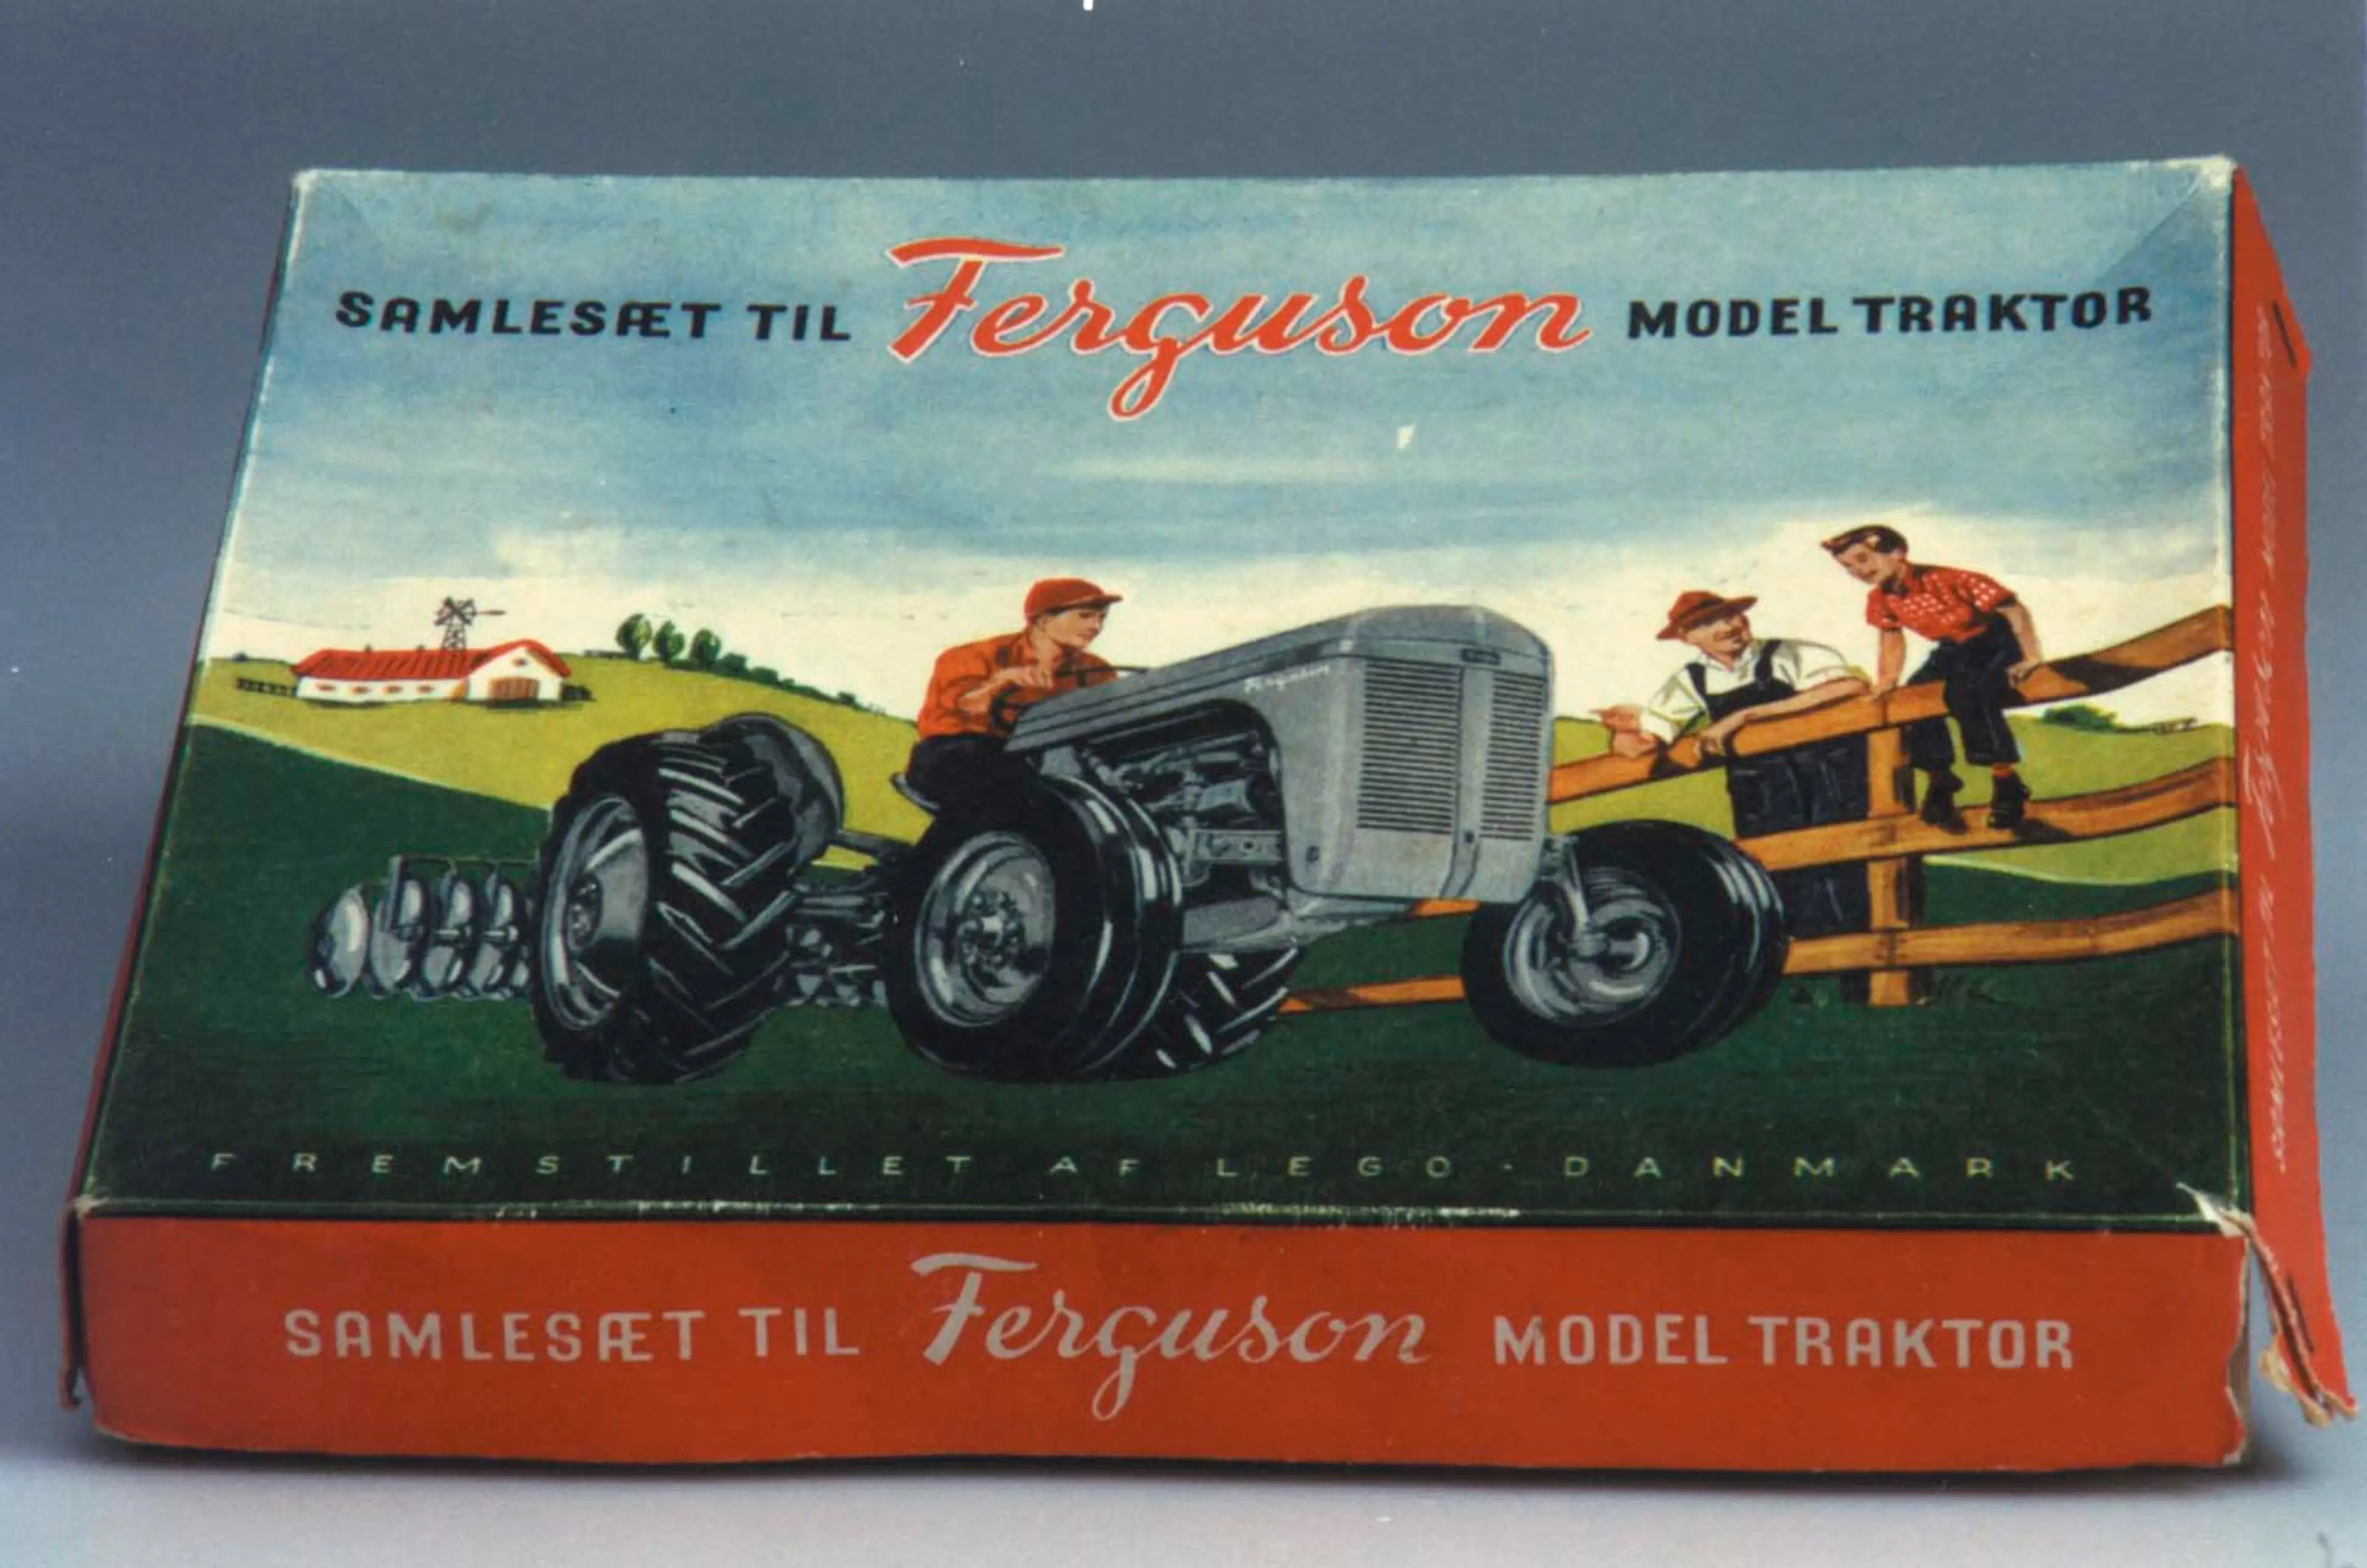 LEGO Ferguson tractor packaging